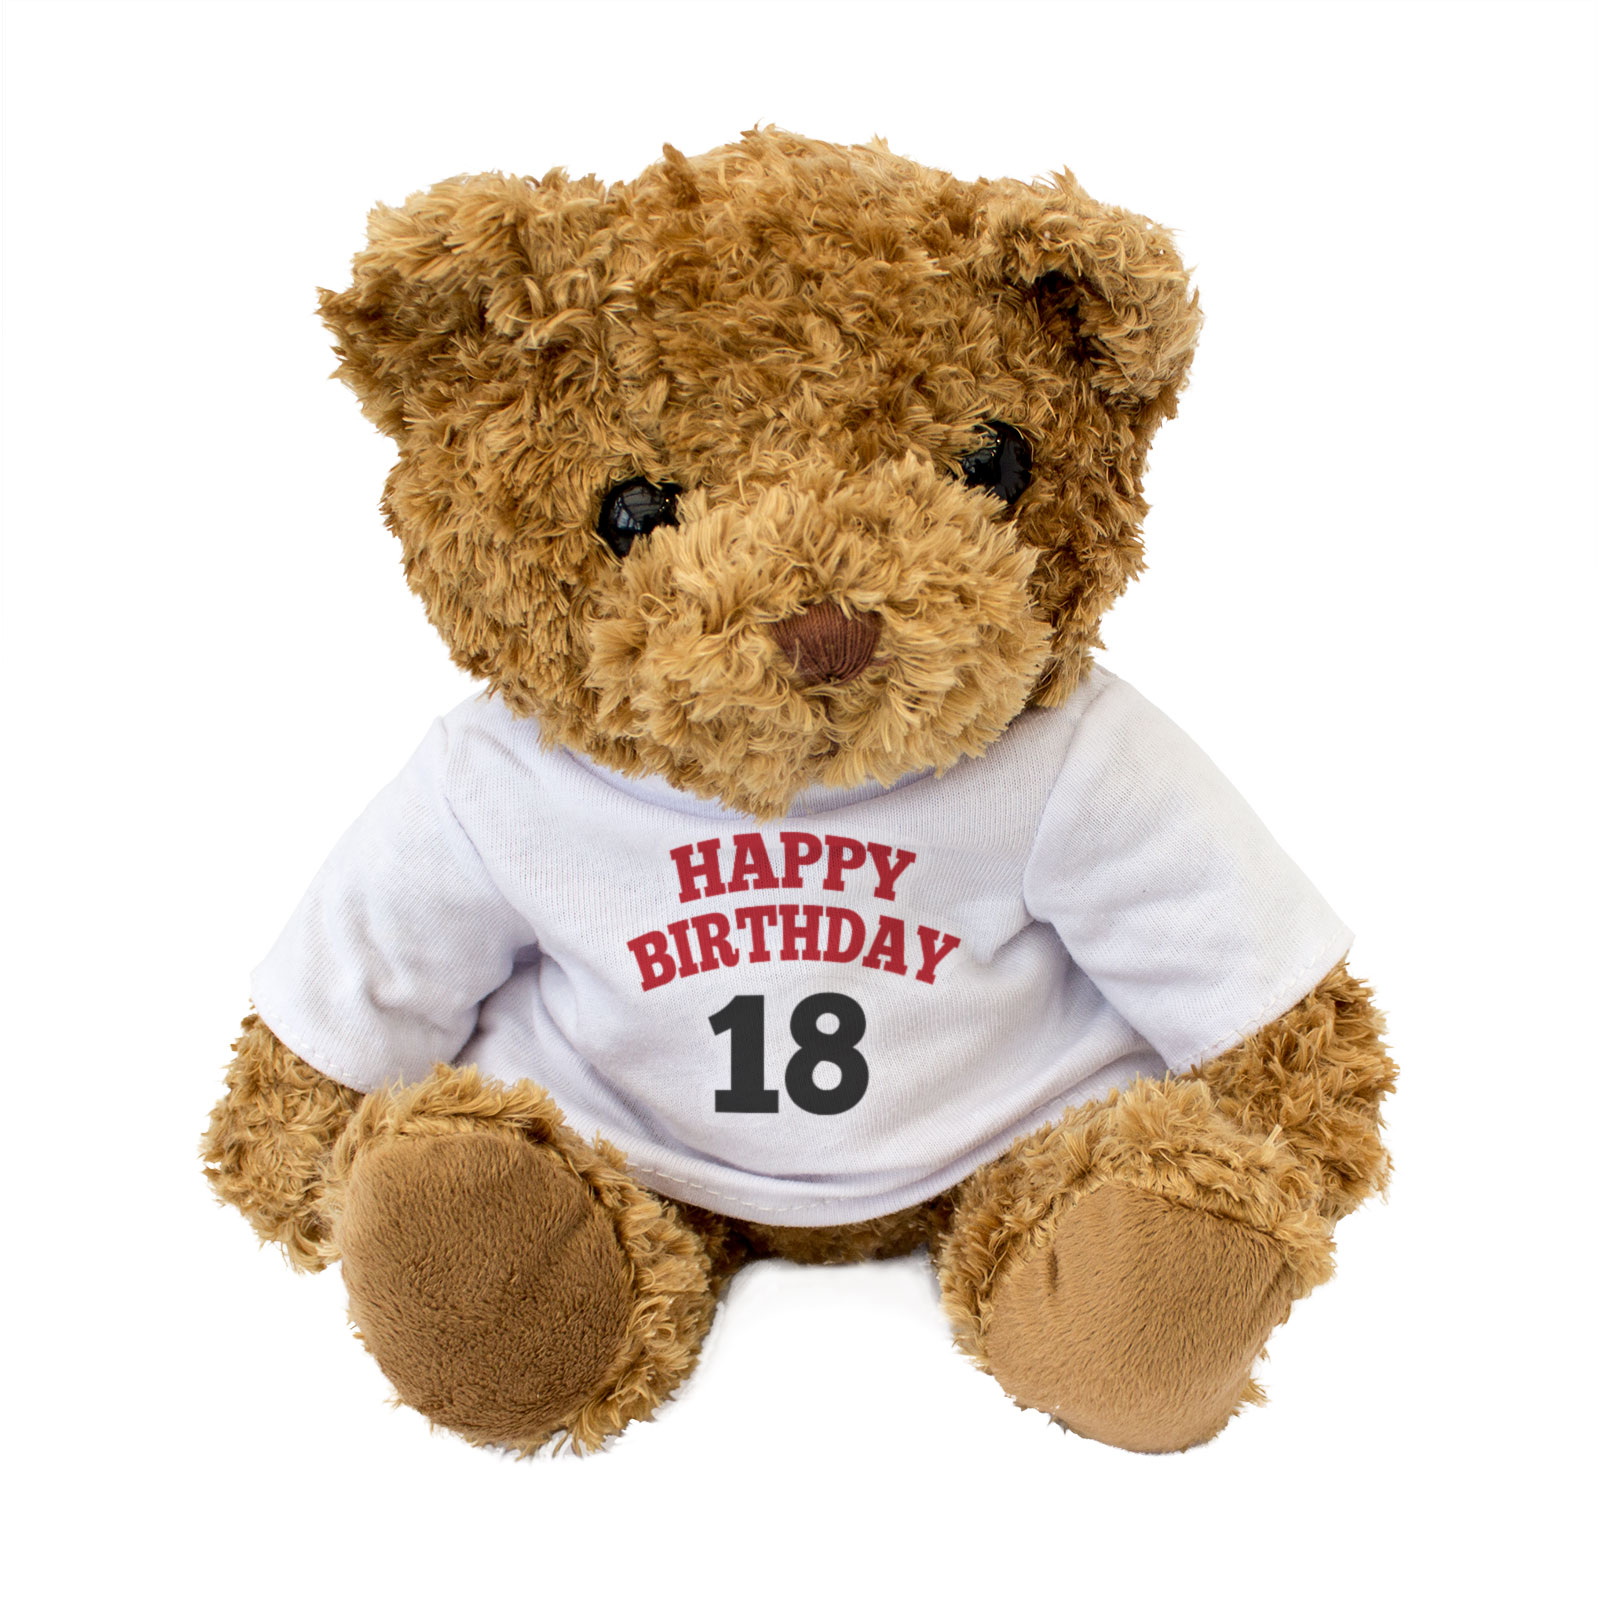 Happy Birthday 18 Years Old - Teddy Bear